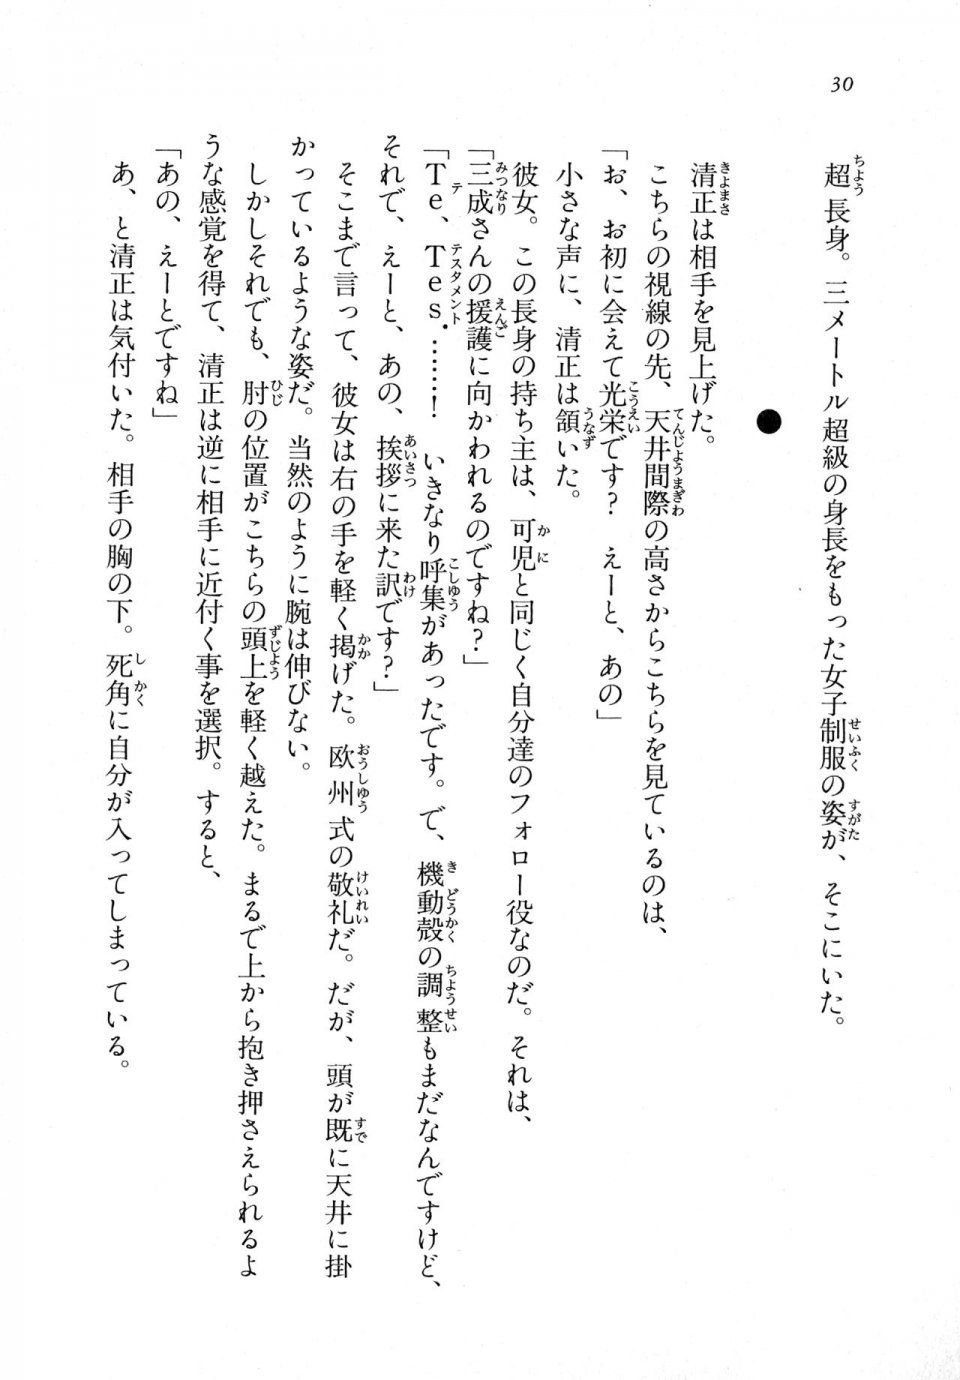 Kyoukai Senjou no Horizon LN Vol 18(7C) Part 1 - Photo #30